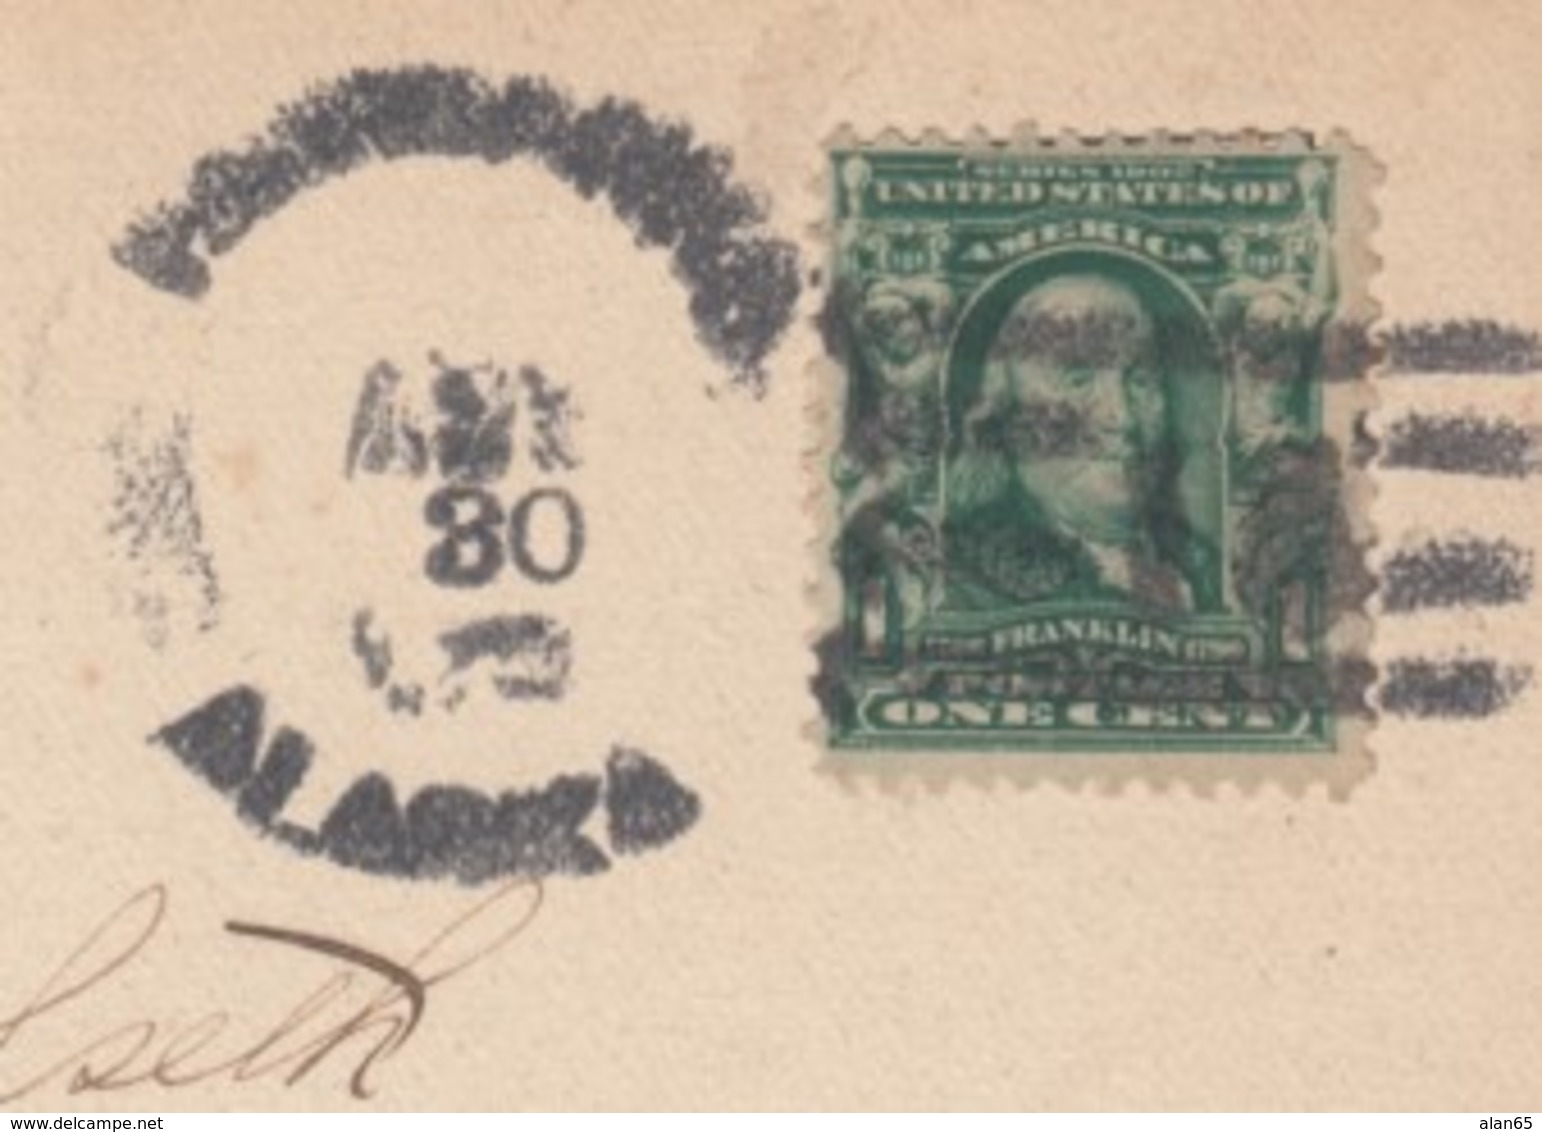 Fairbanks Alaska Doane Cancel Earliest Know Use EKU, Skagway AK Postcard Sent To Seattle WA August 1906 - Postal History